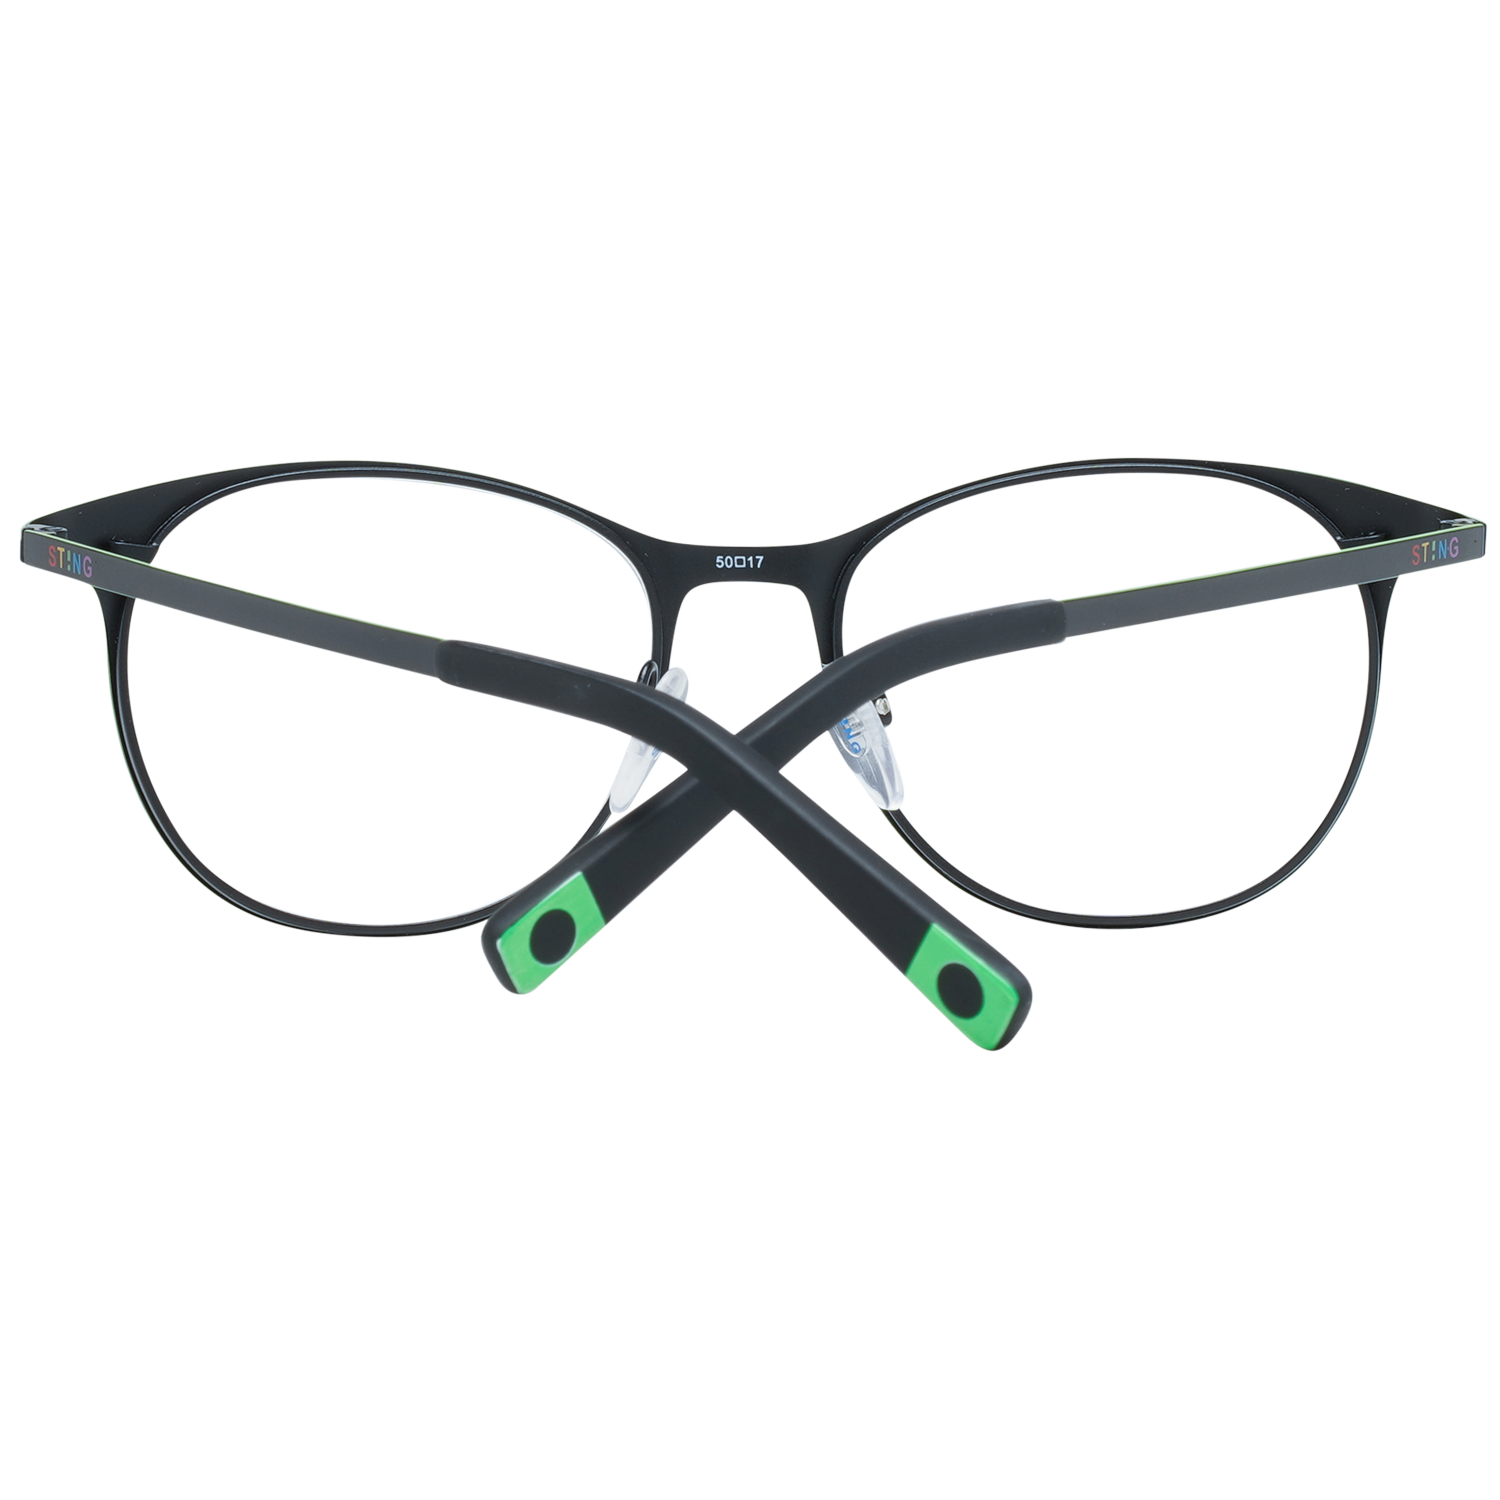 Sting Frames Sting Optical Frame VST016 0SG6 50 Eyeglasses Eyewear UK USA Australia 